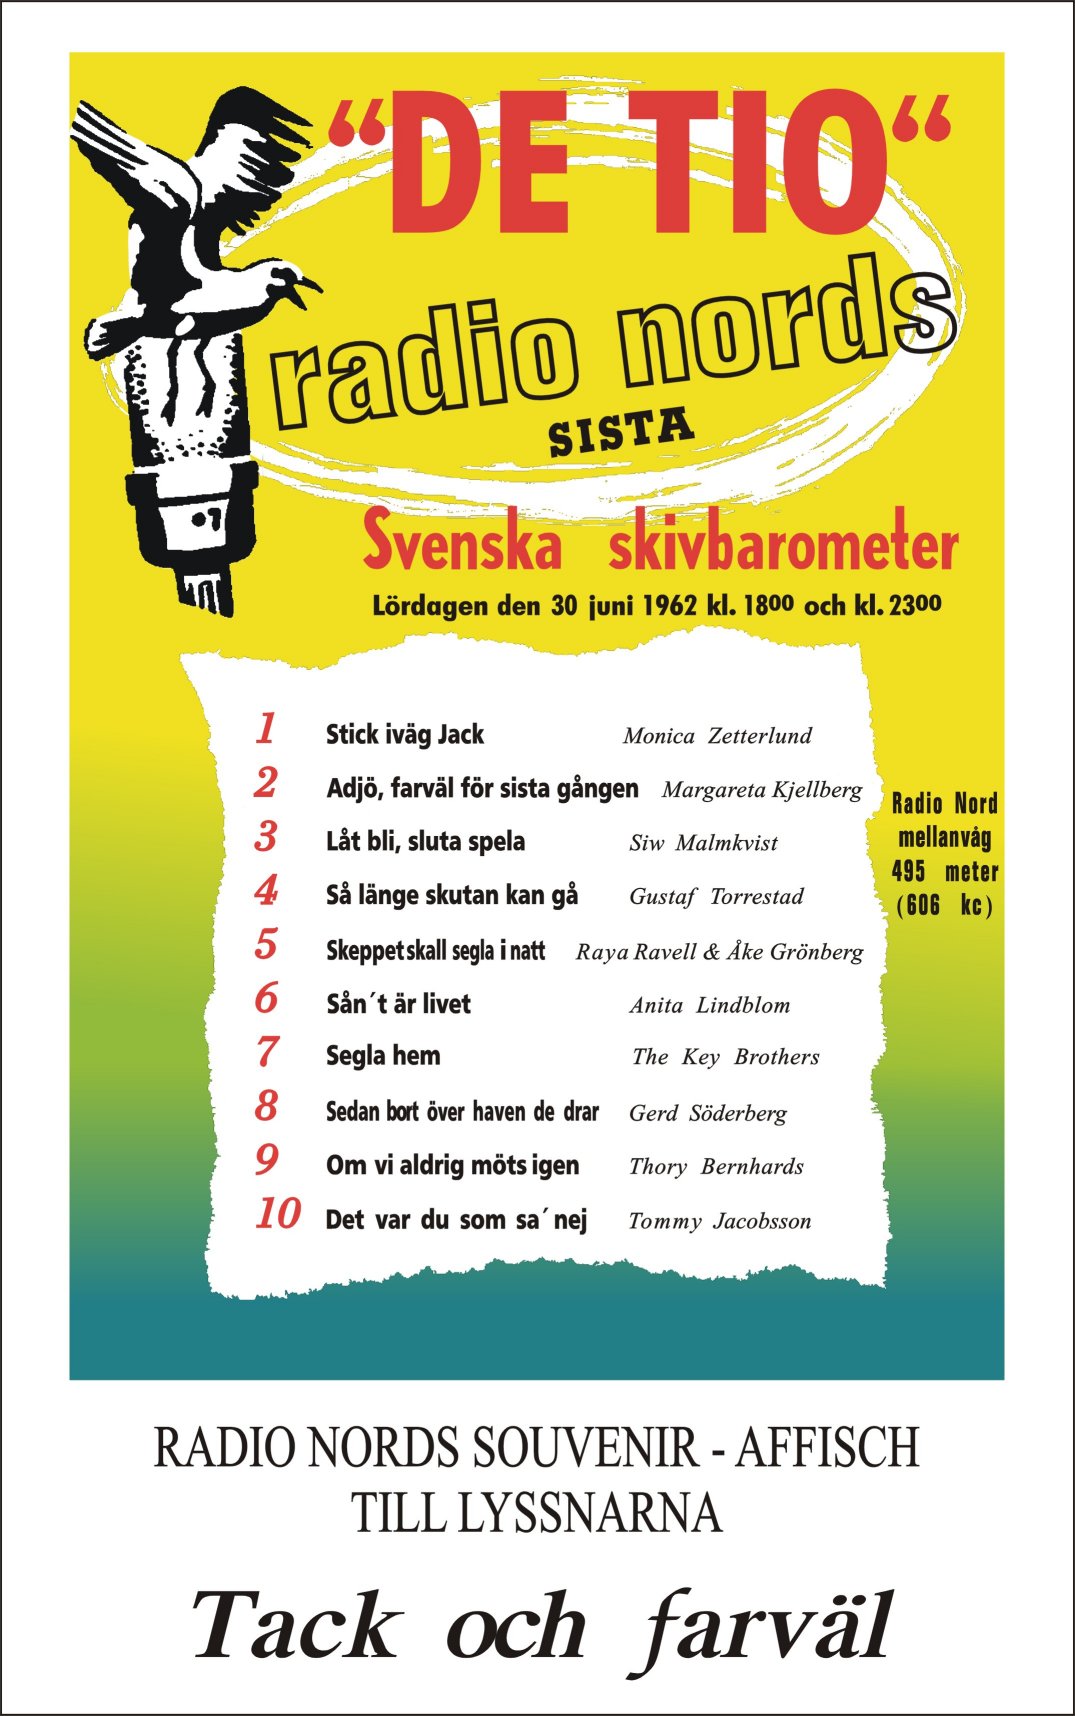 Radio Nord topp tio